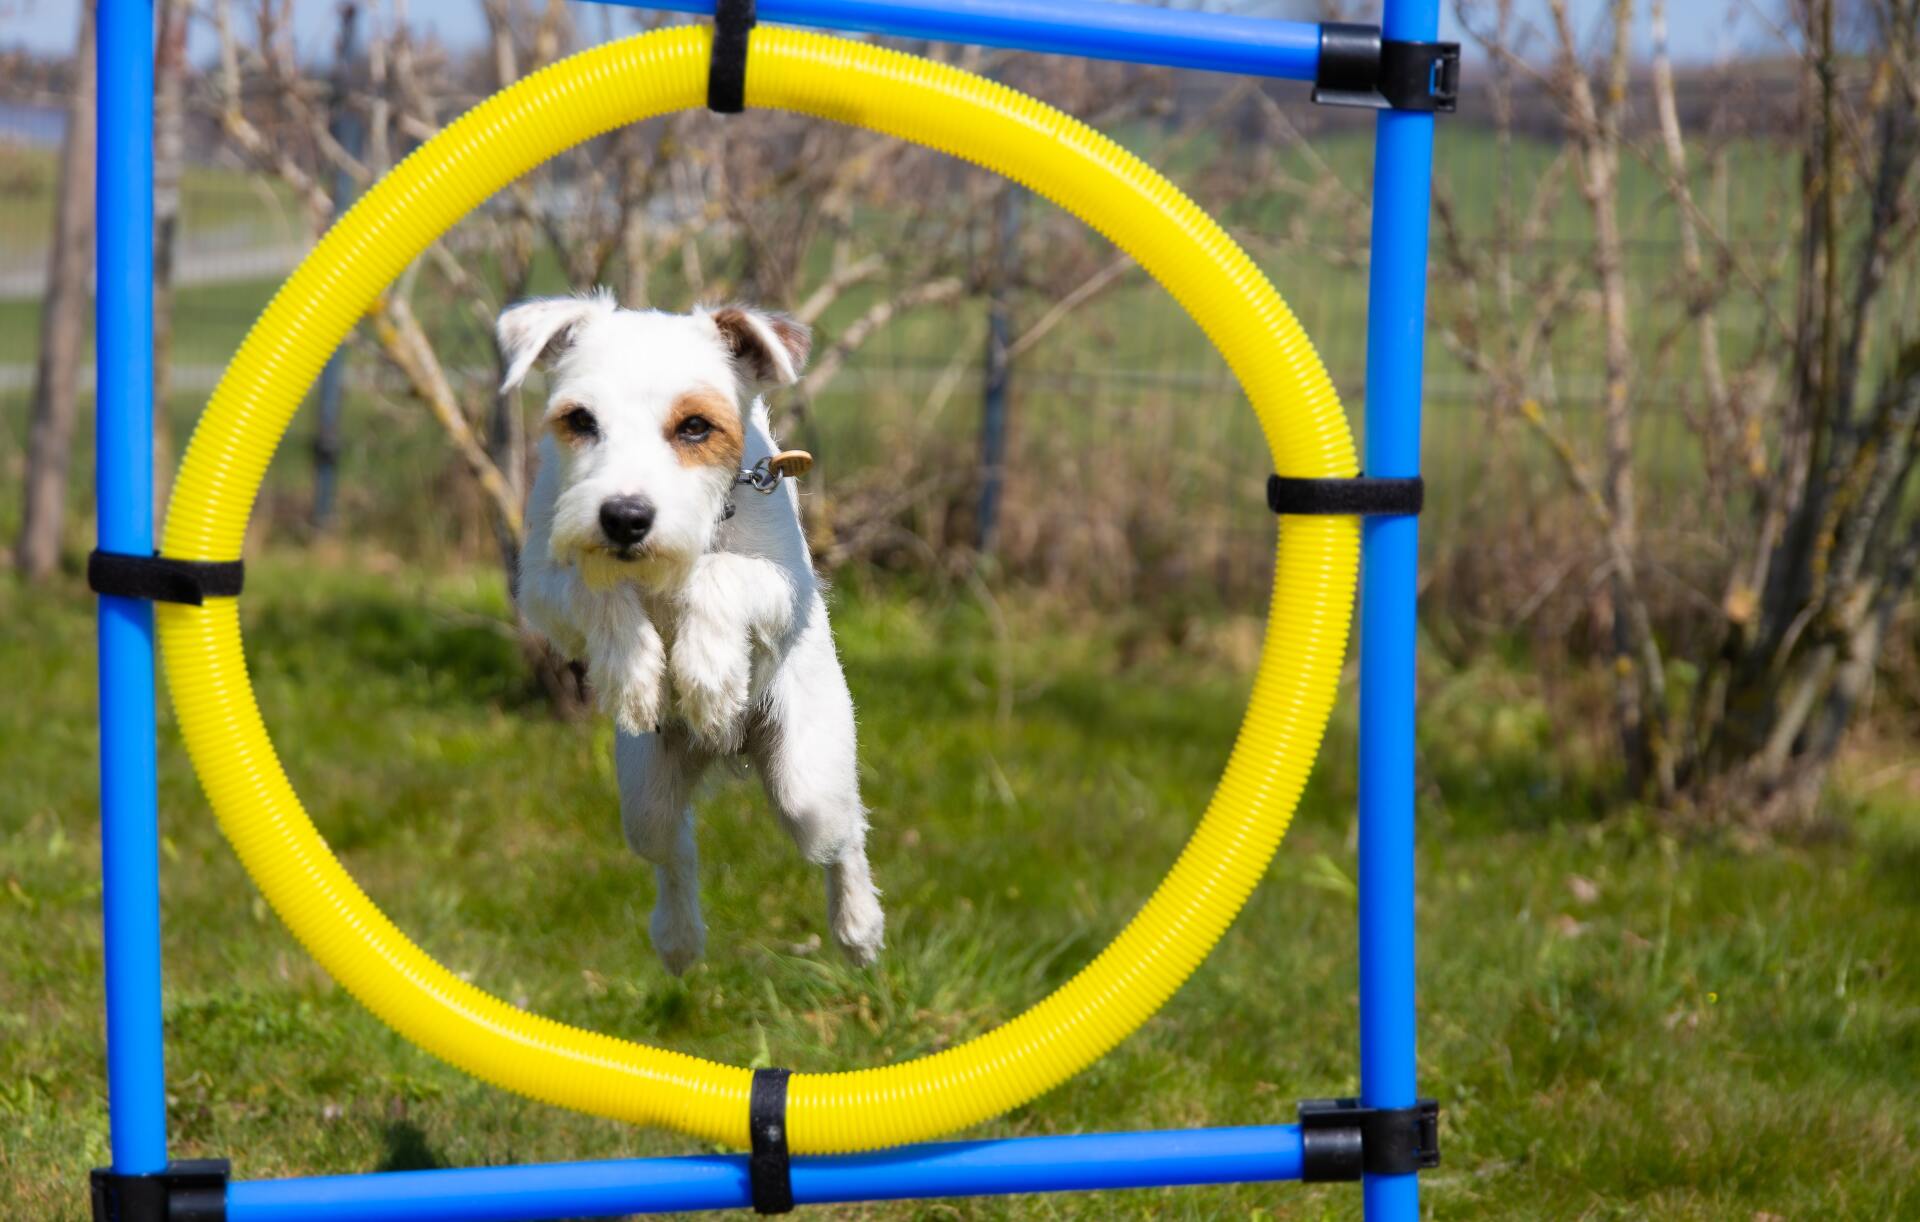 Cute dog agility dog jumping through tire